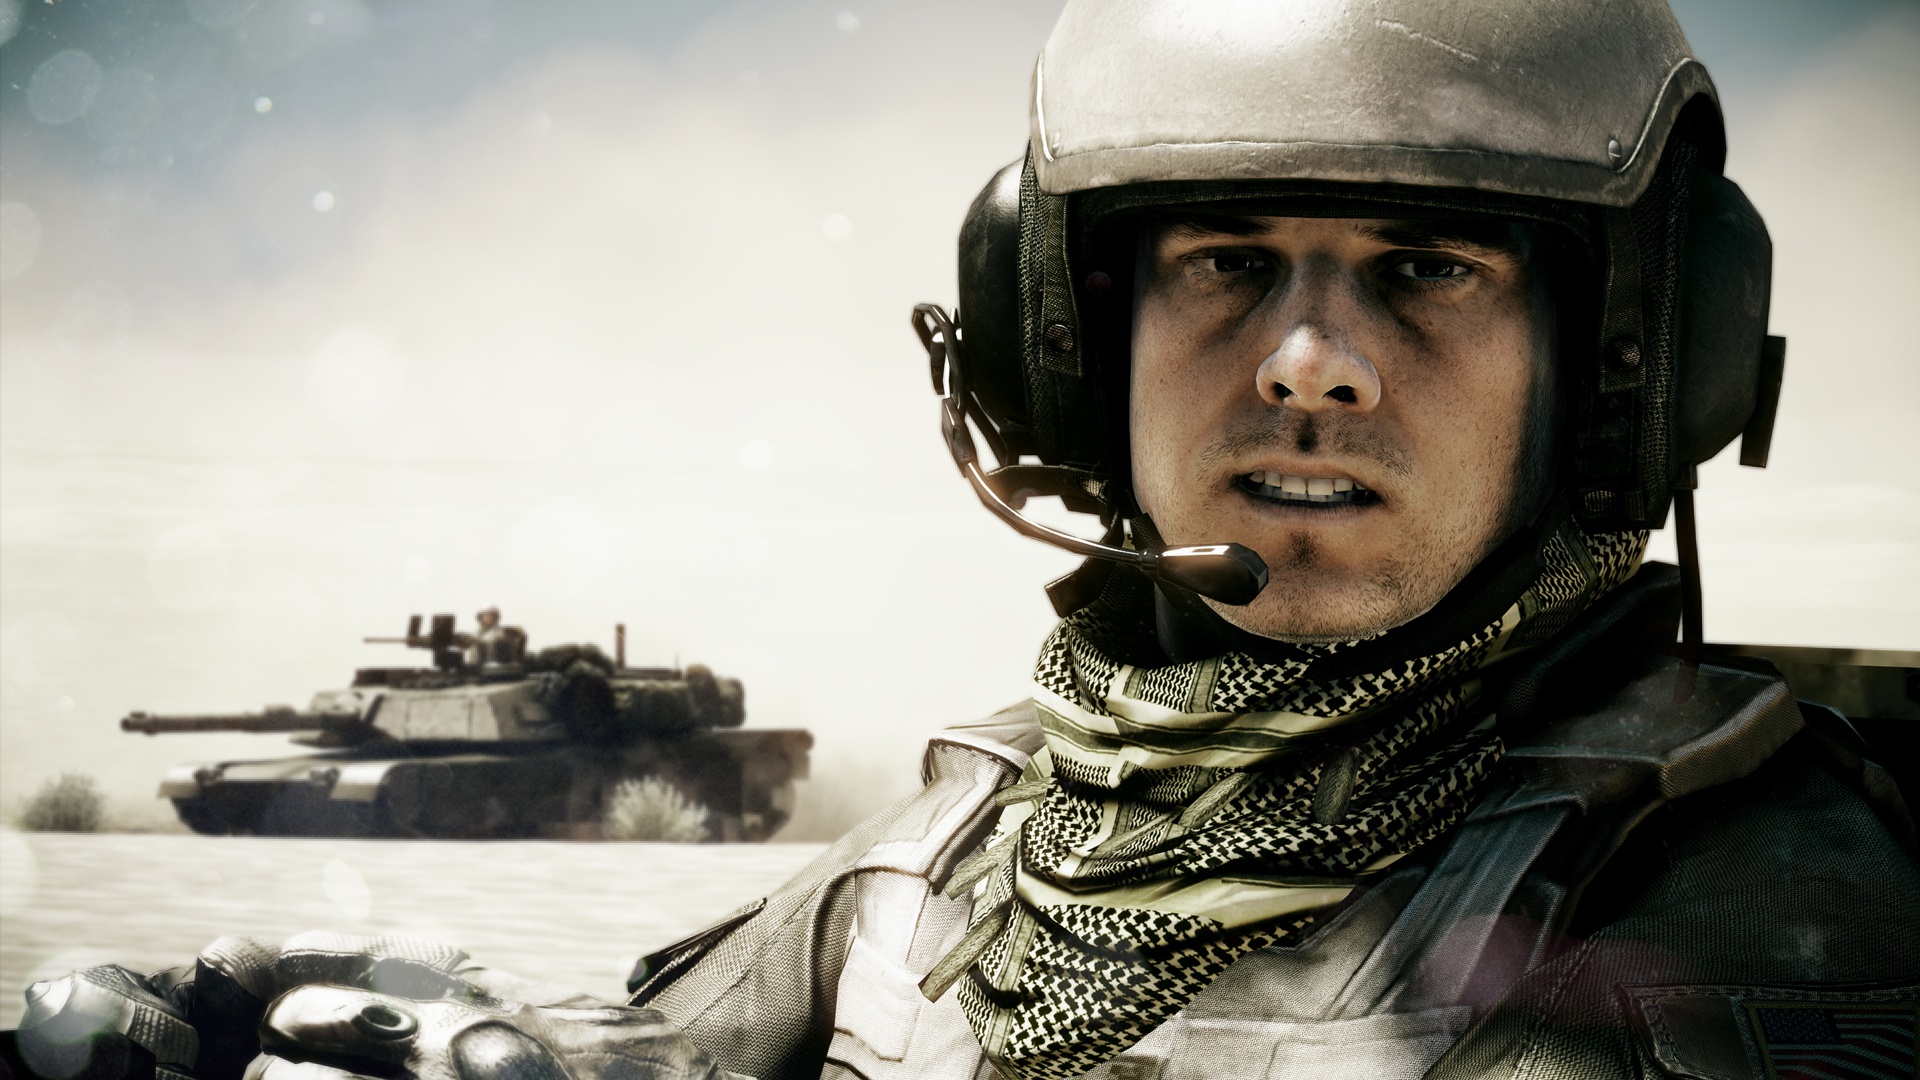 Descarga gratuita de fondo de pantalla para móvil de Battlefield 3, Campo De Batalla, Videojuego.